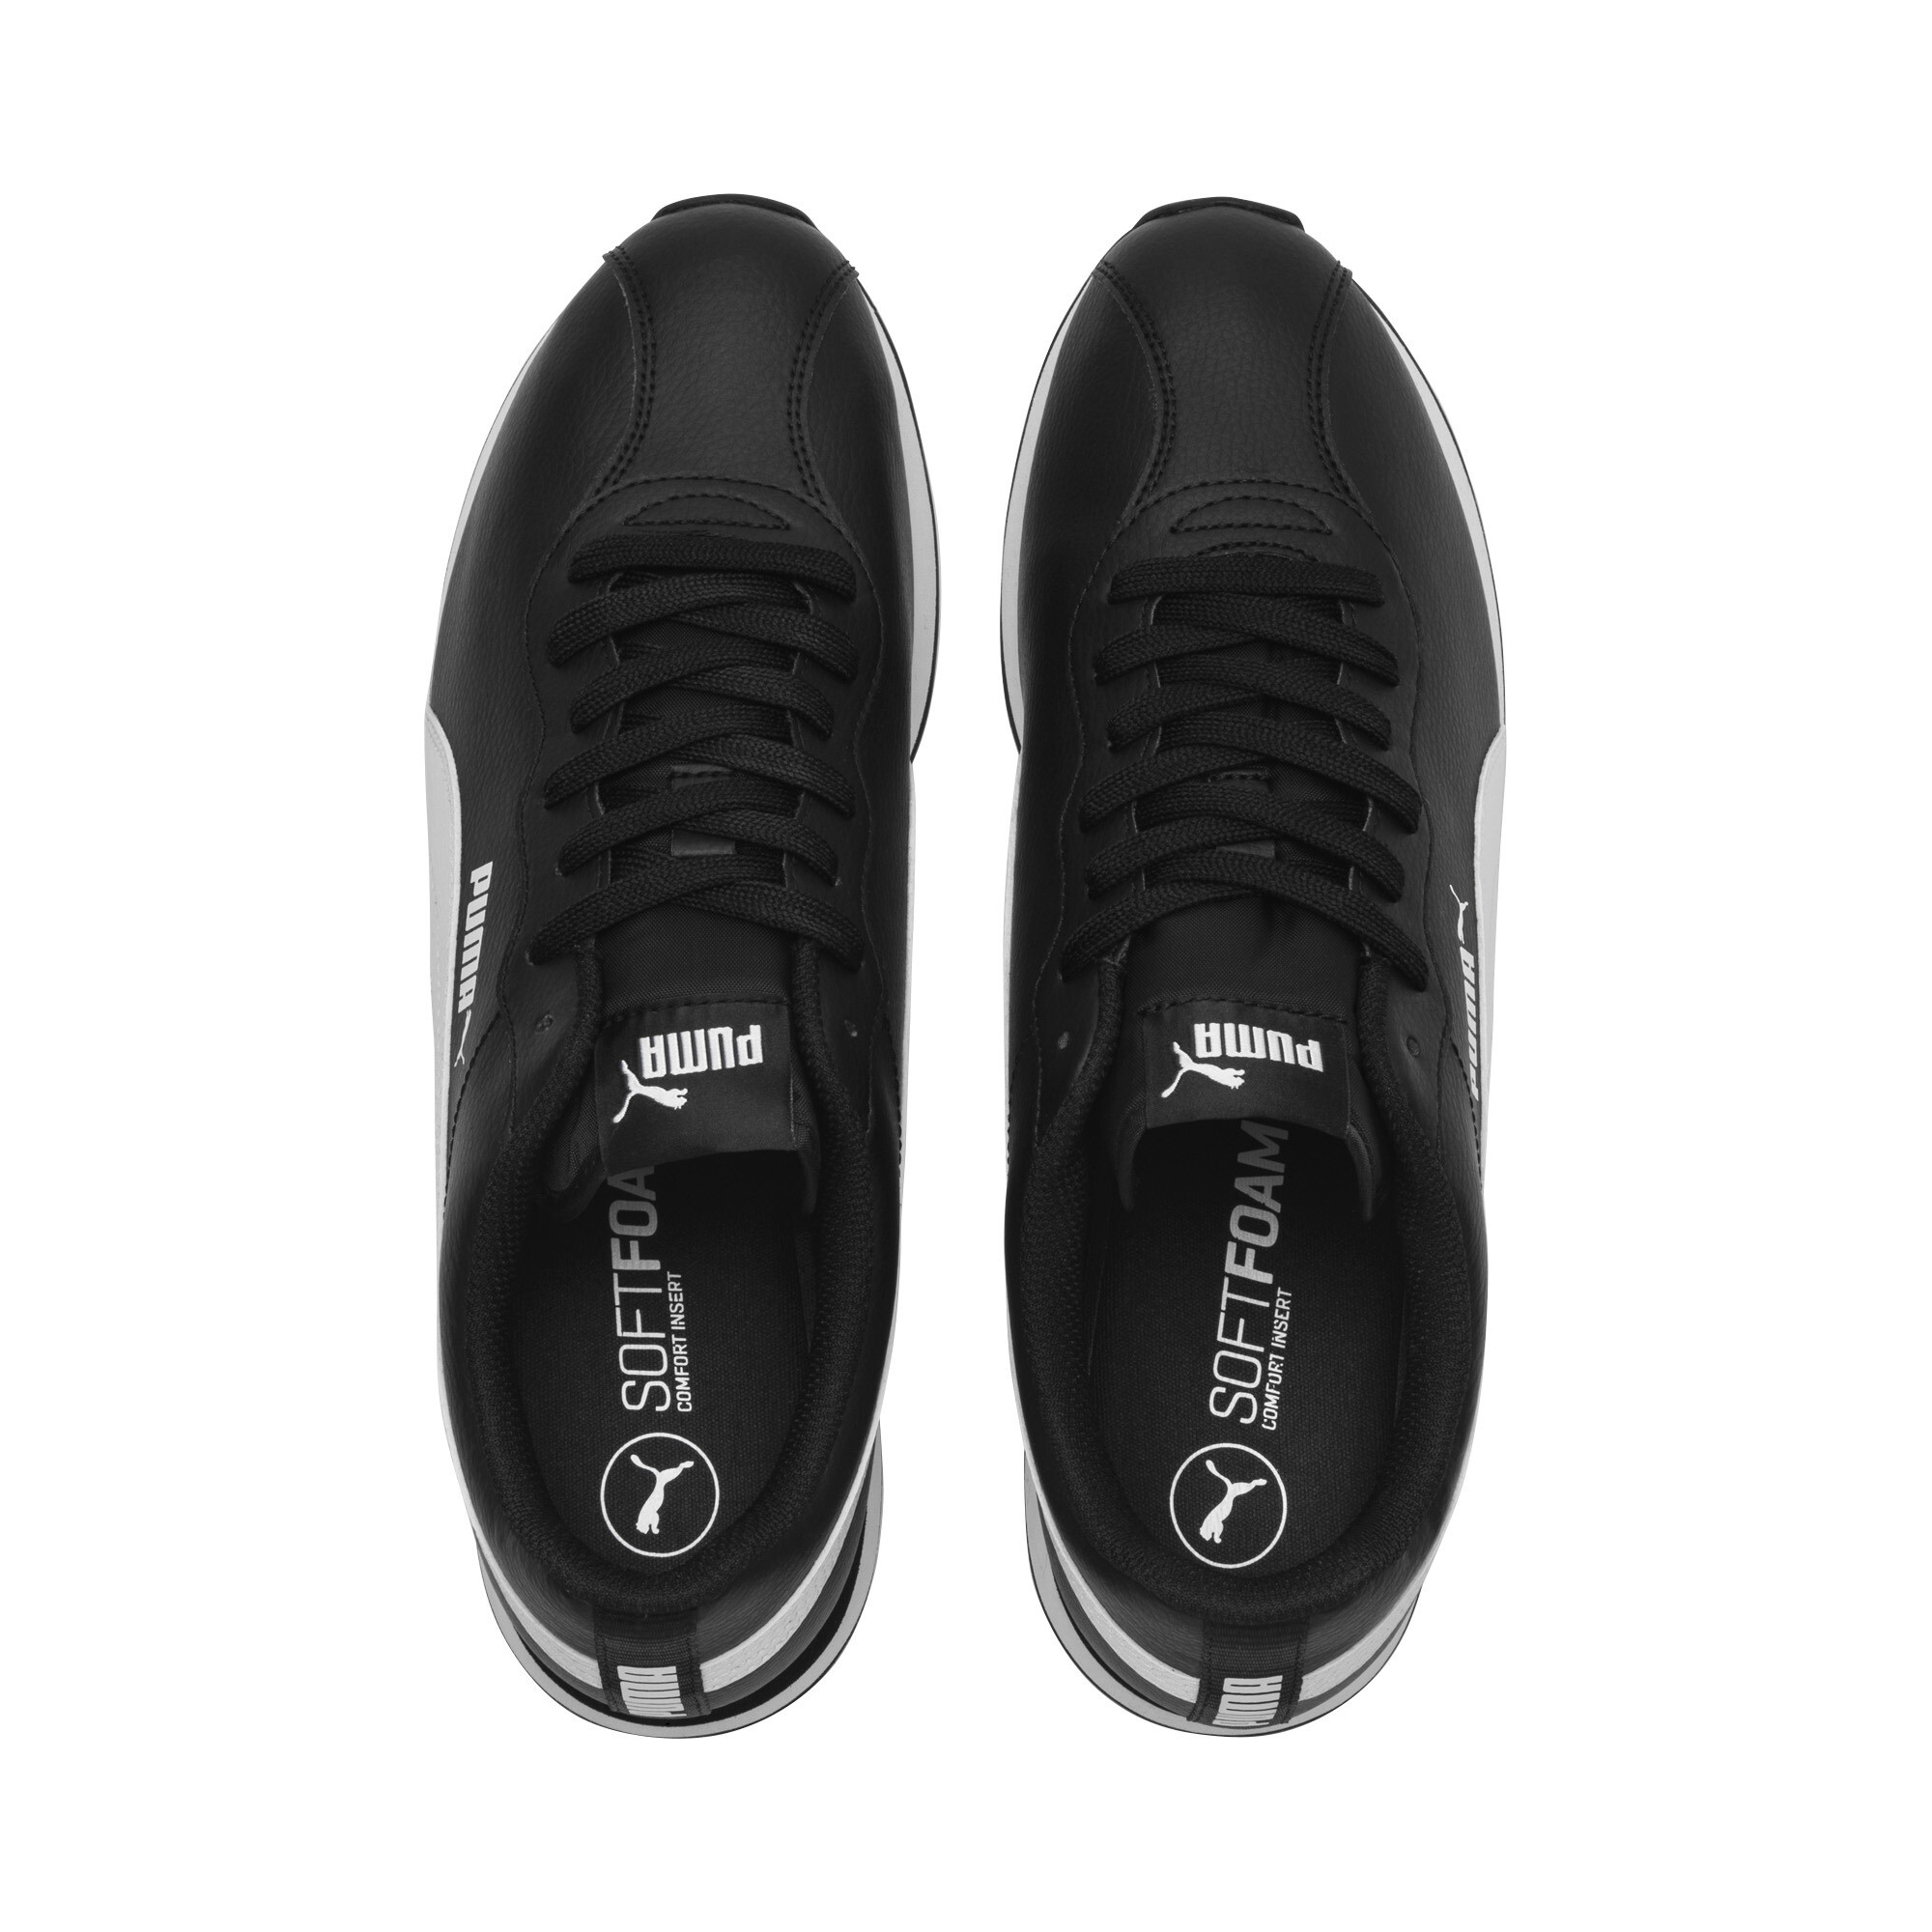 PUMA Turin II Men's Sneakers Men Shoe Basics | eBay